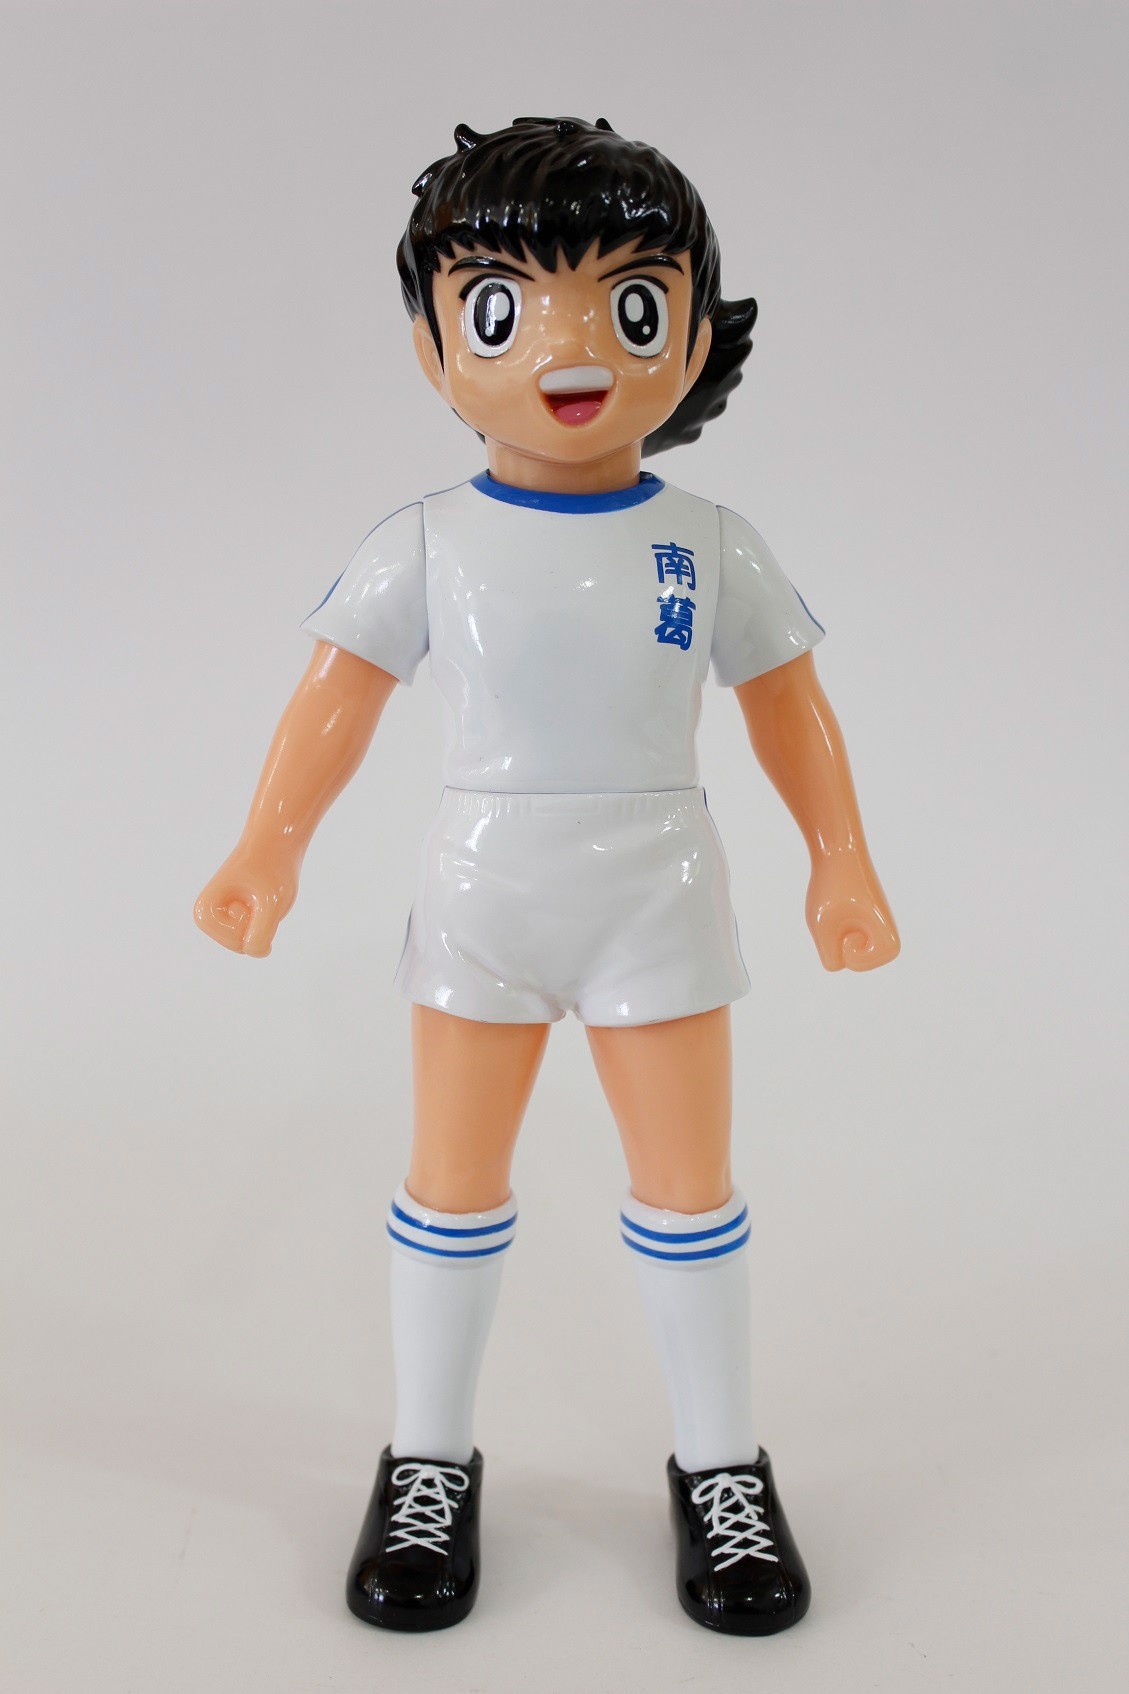 Captain Tsubasa Soft Vinyl Figure